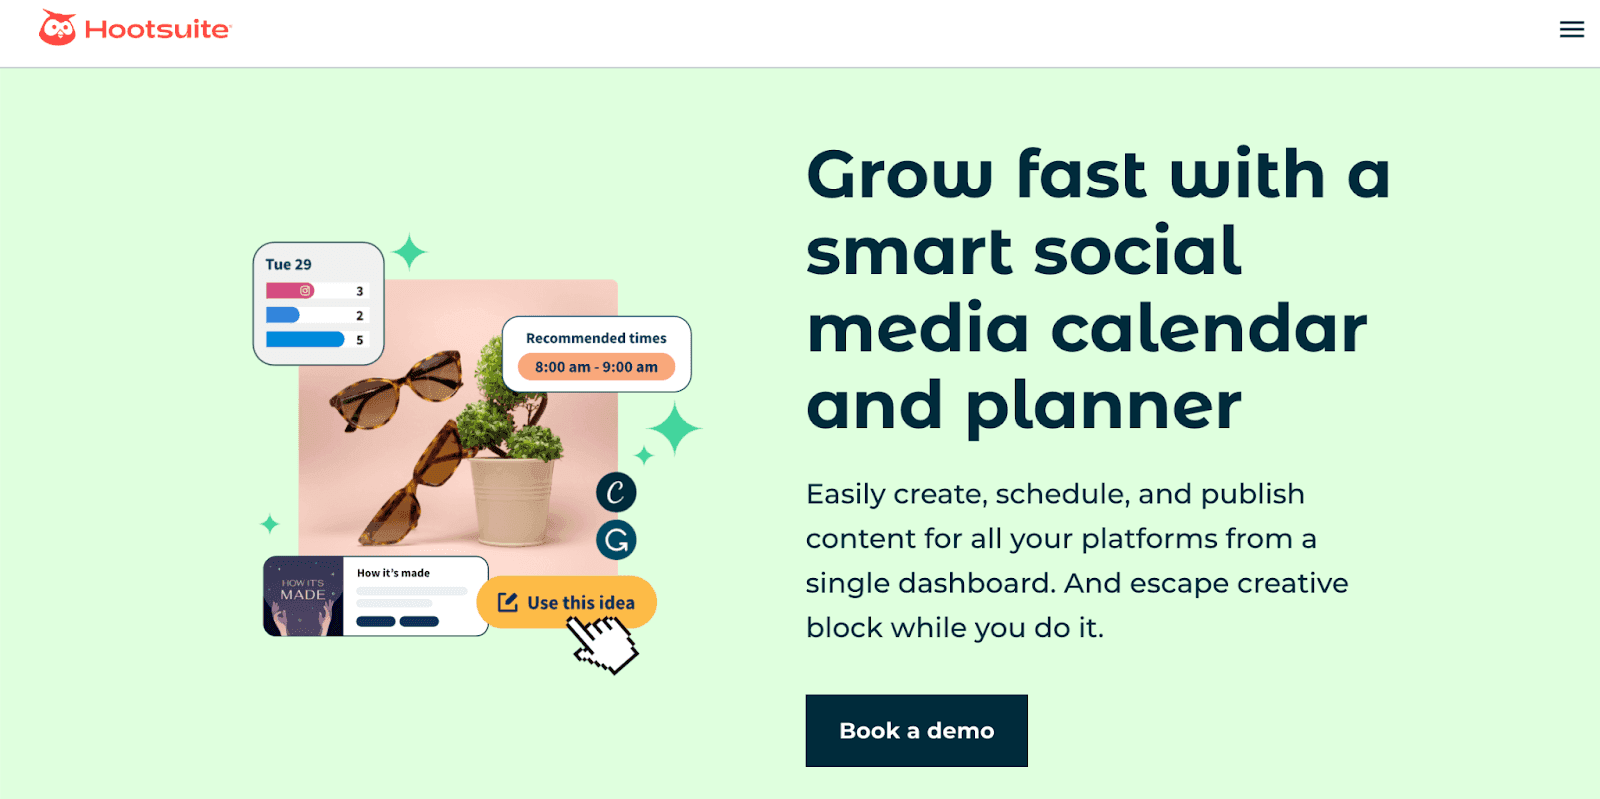 Hootsuite social media calendar signup page - Grow fast with a smart social media calendar and planner